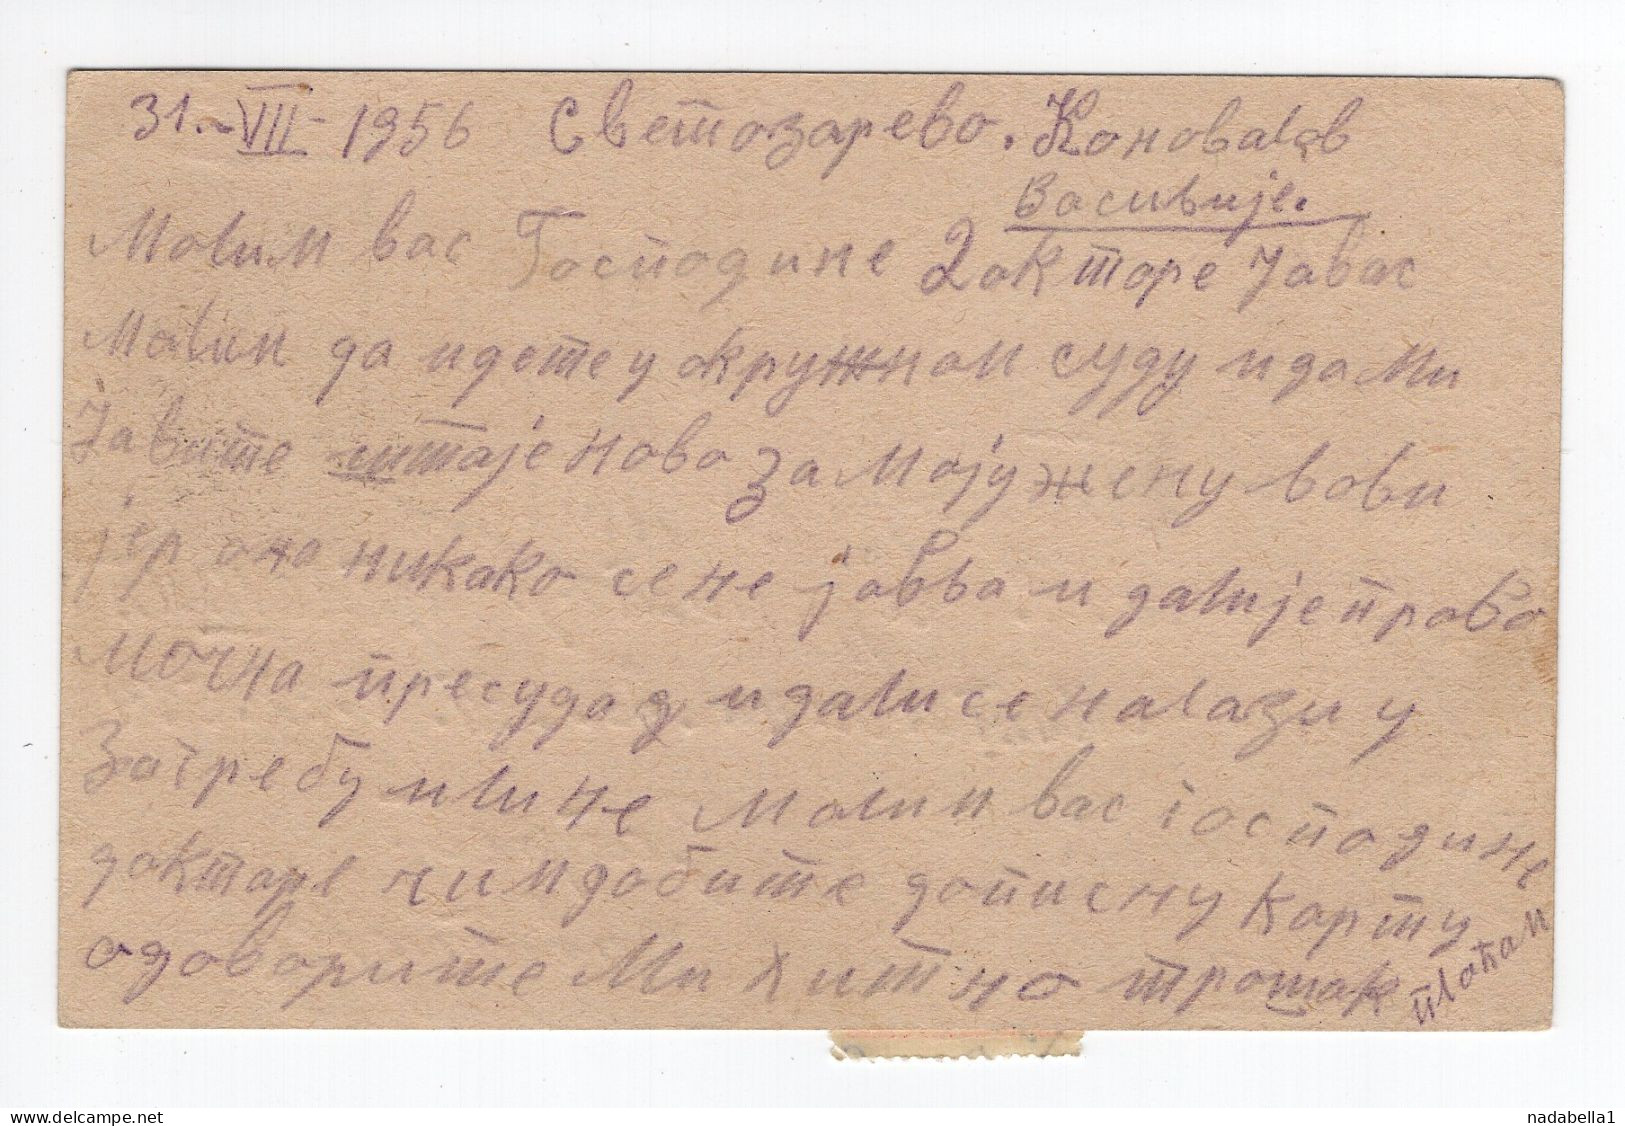 1956. YUGOSLAVIA,SERBIA,SVETOZAREVO,POSTAGE DUE IN ZAGREB,STATIONERY CARD,USED - Postage Due